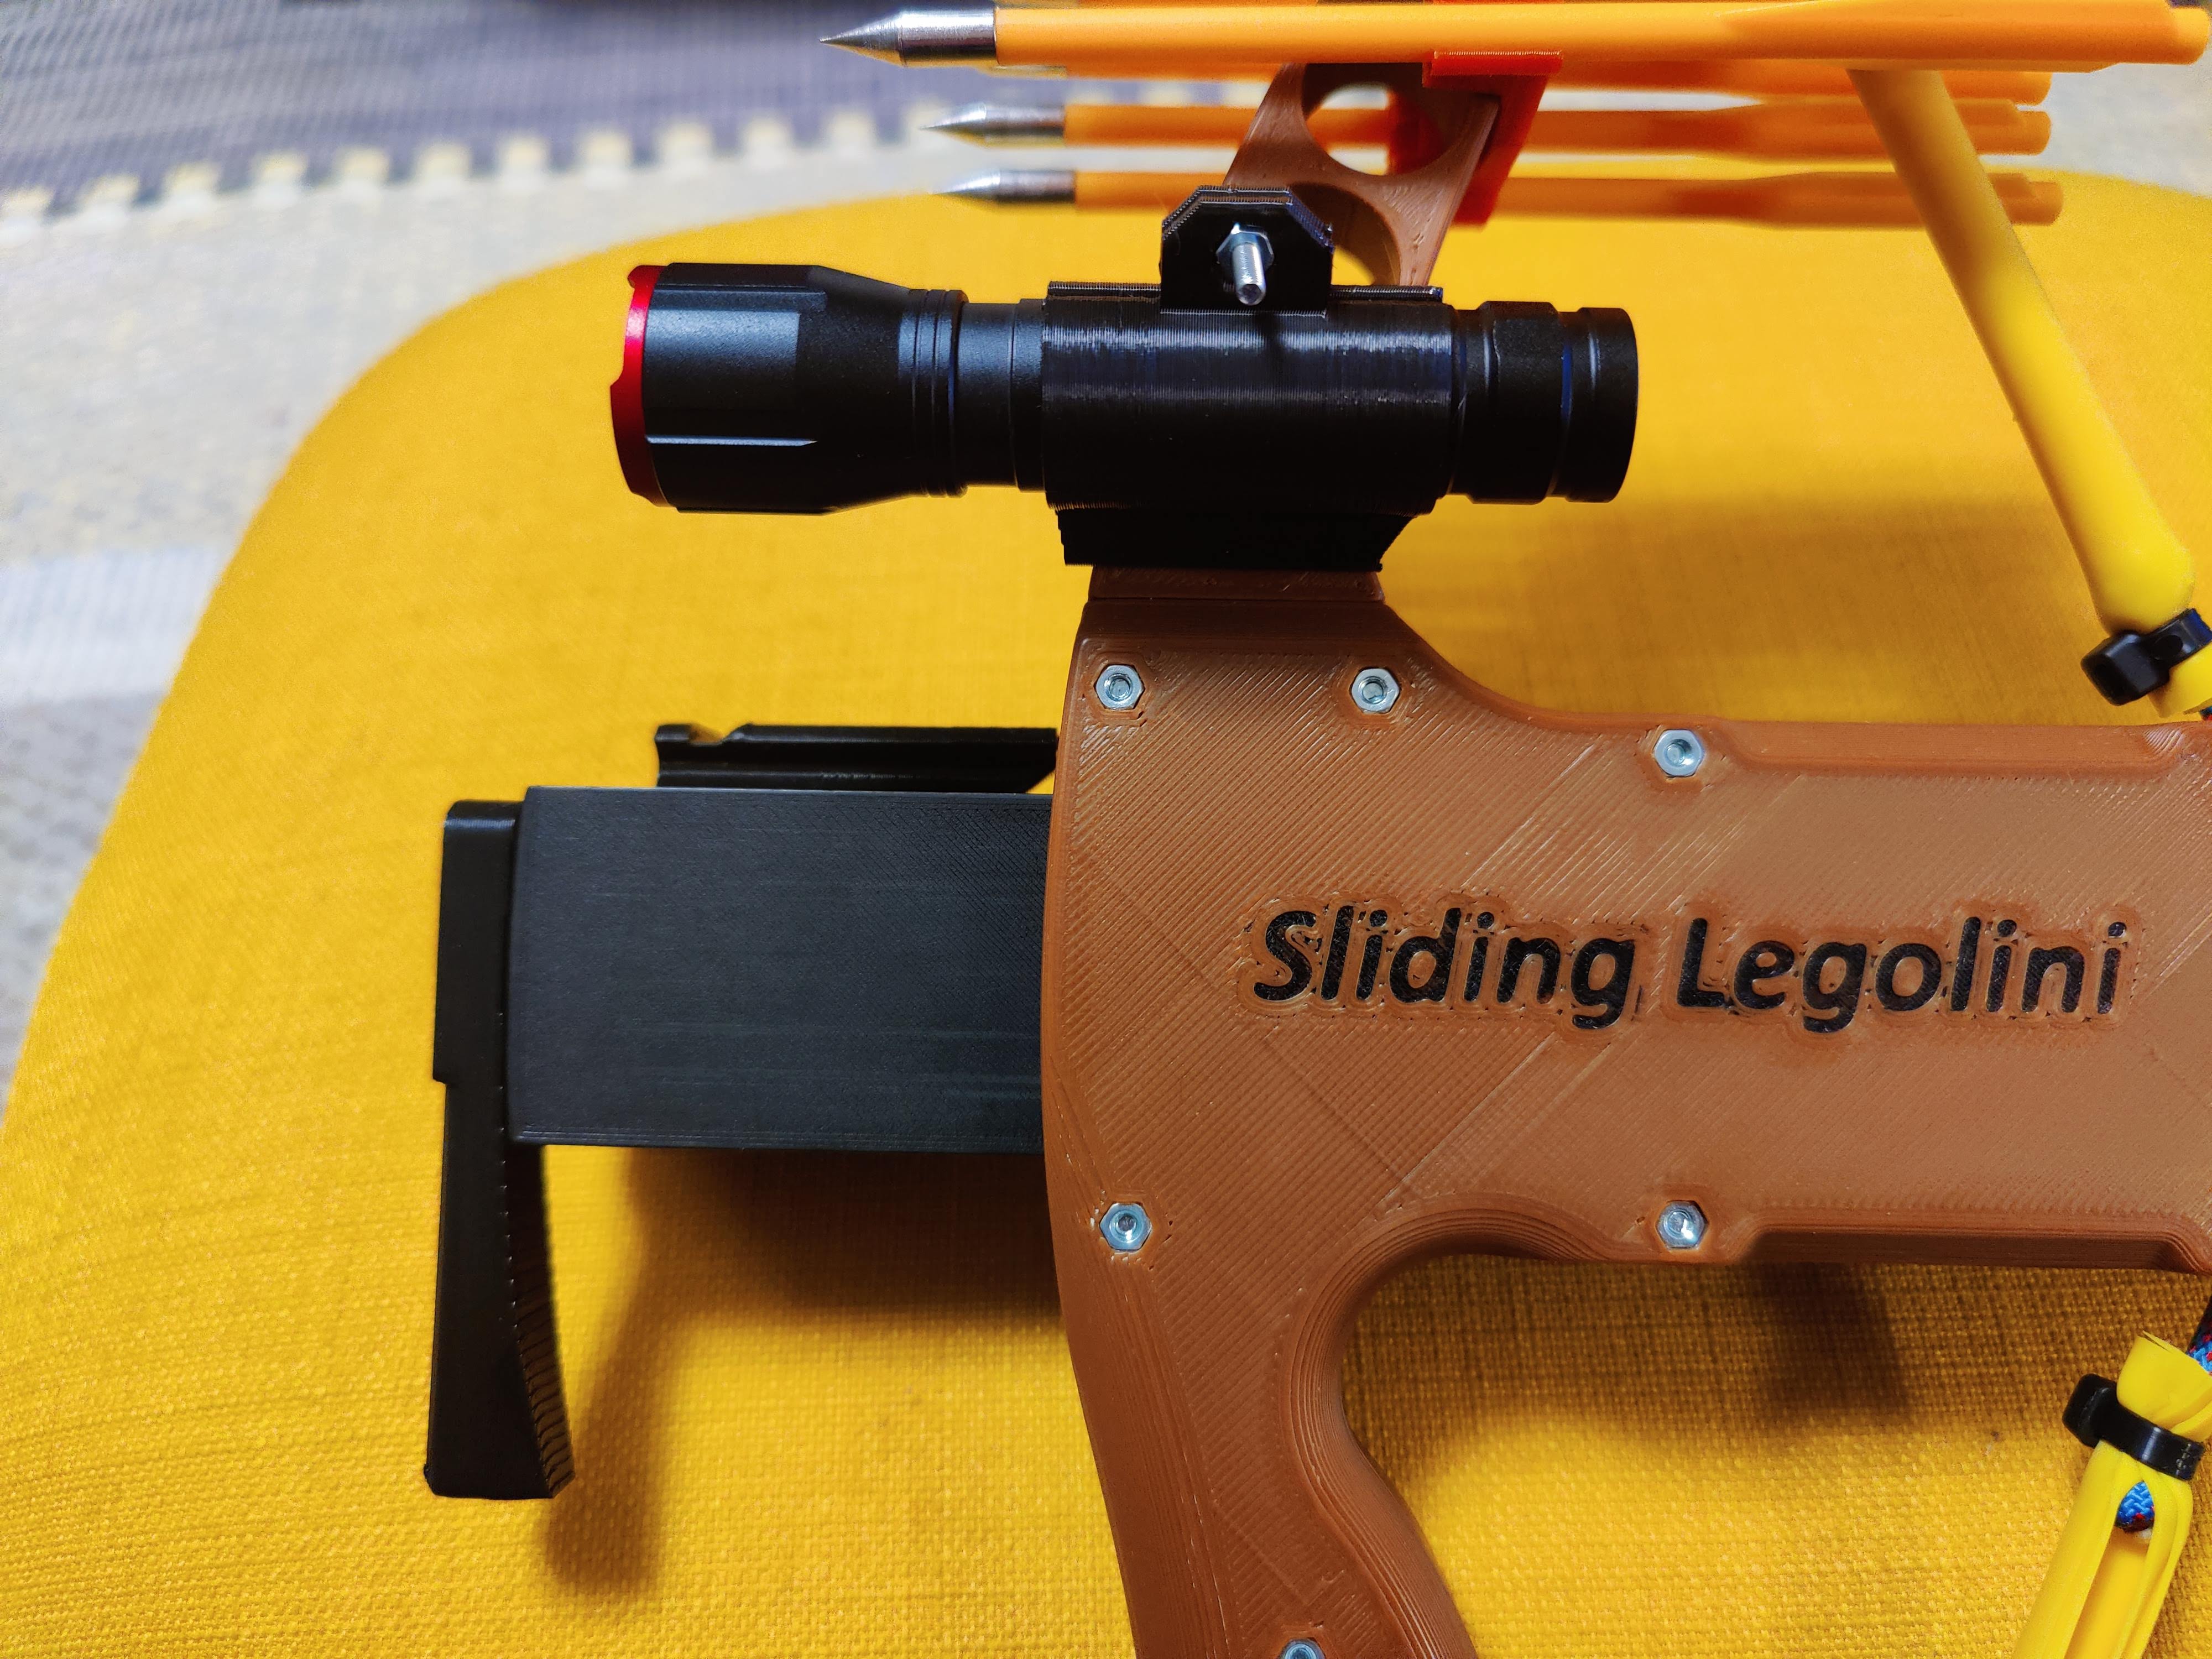 Sliding Legolini flashlight mount